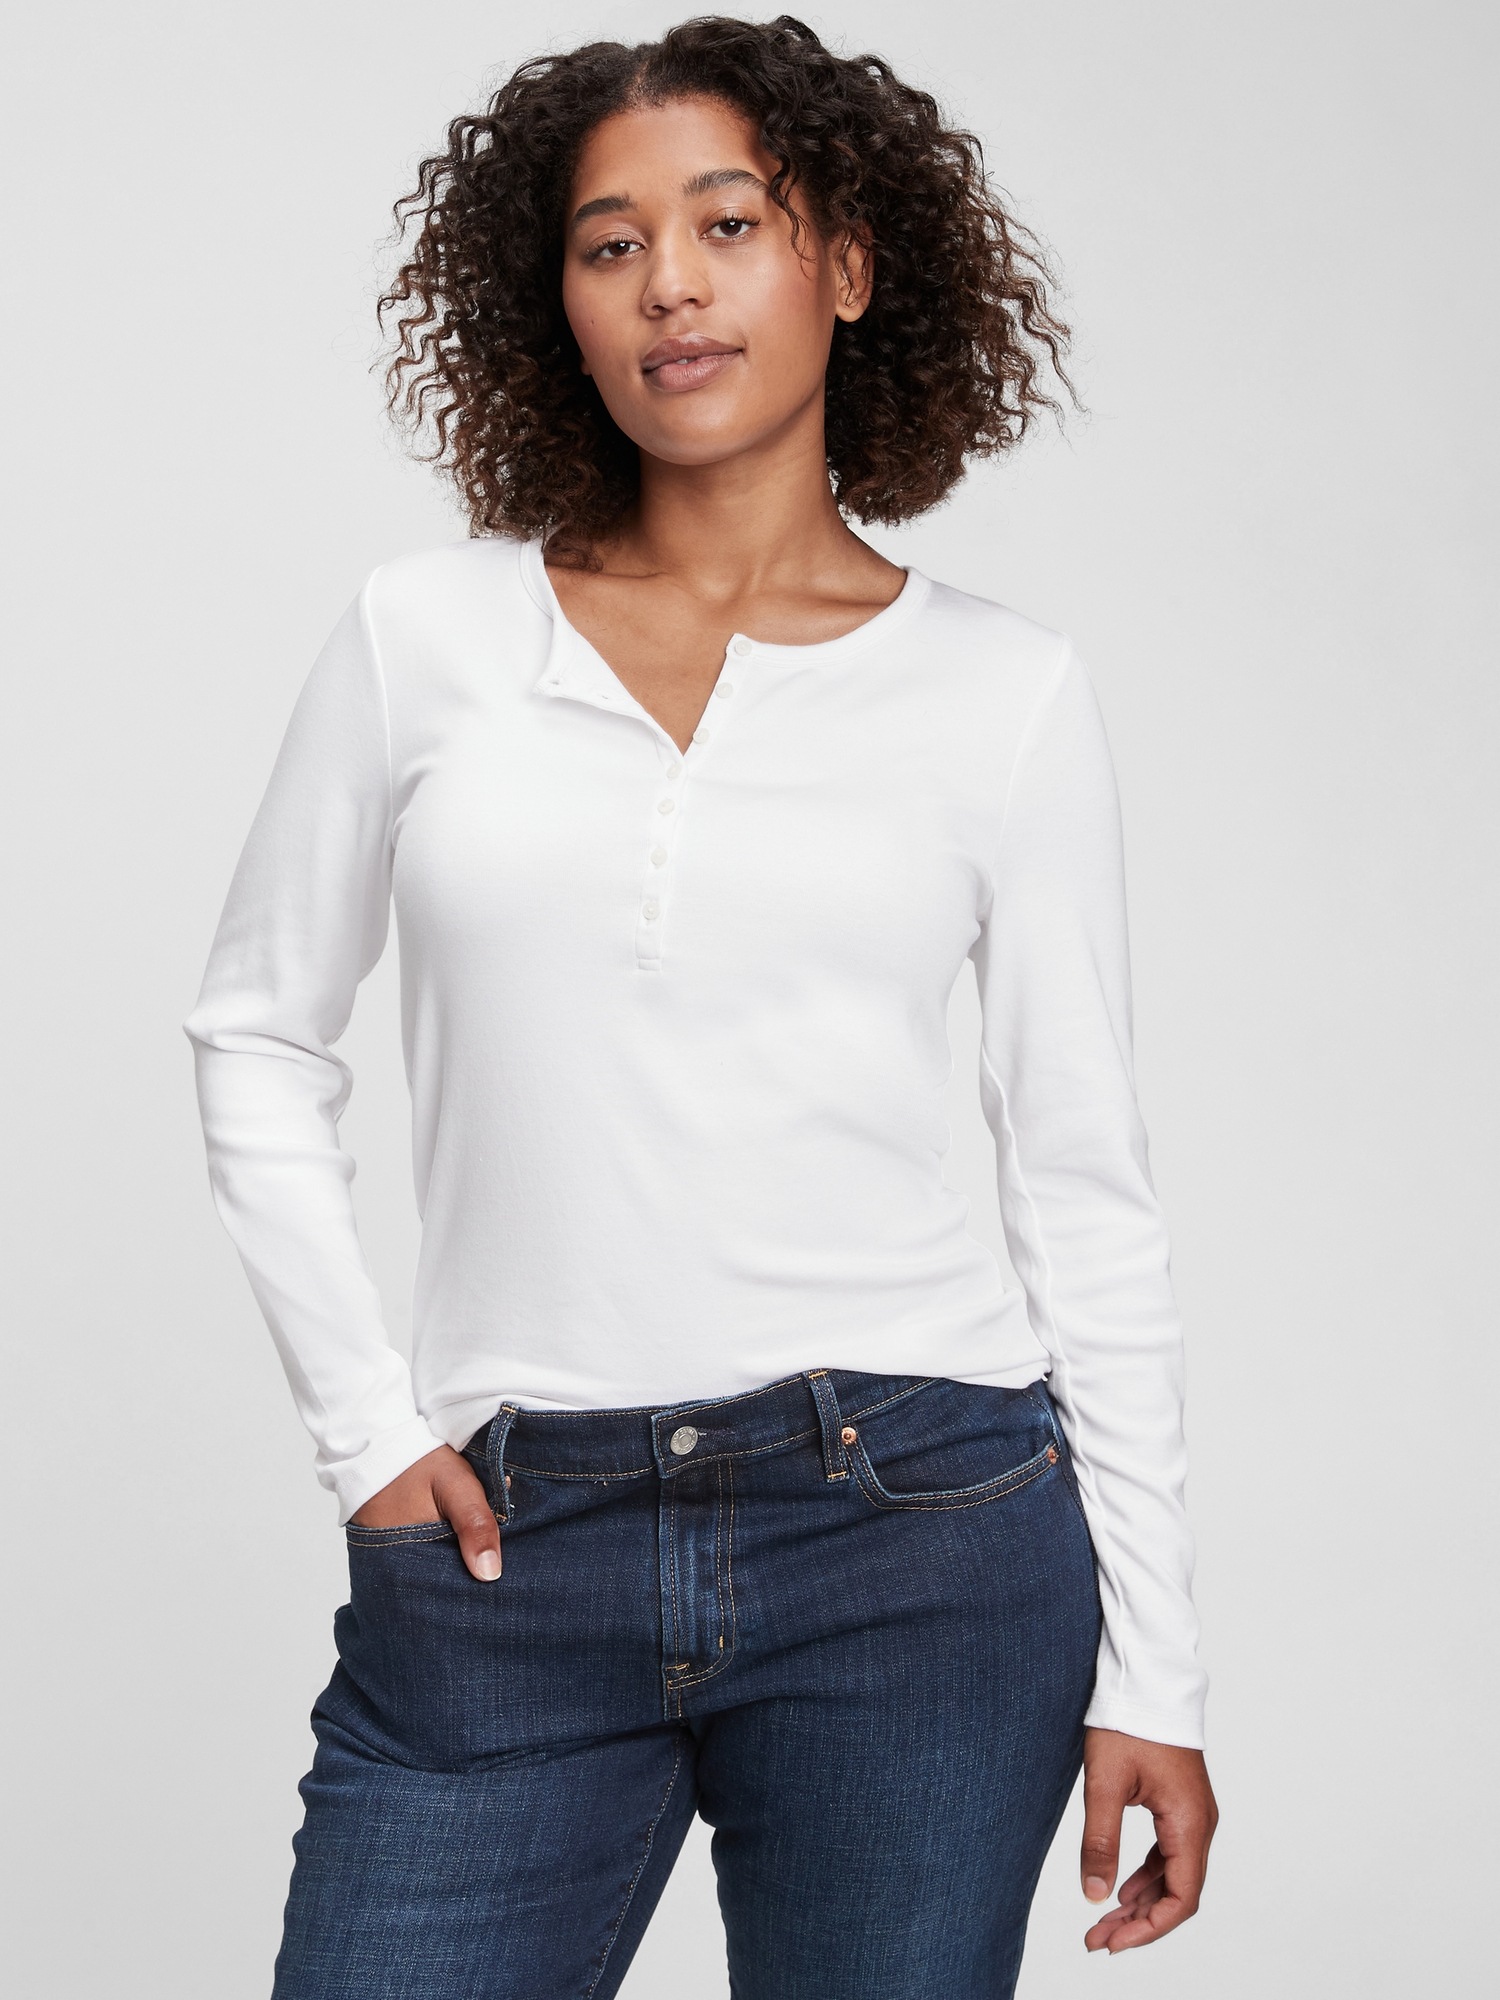 Elainilye Fashion Women T Shirt Henley Solid Print Button Loose Long Sleeve  Tops Hooded Sweatshirts 